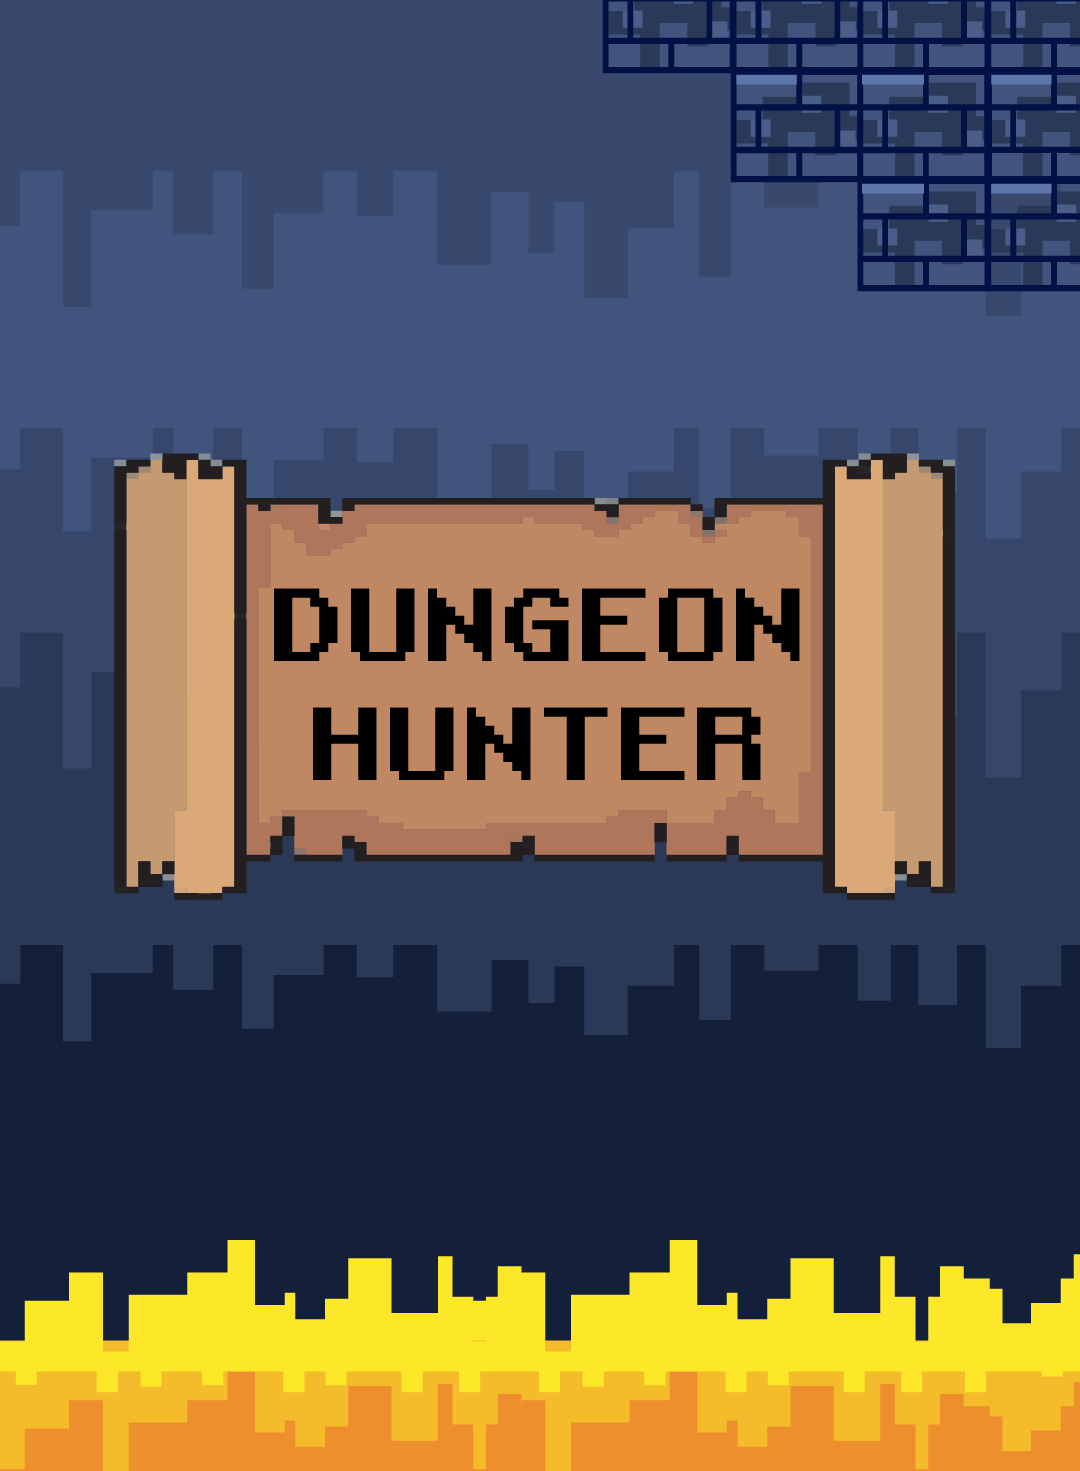 dungeon hunter